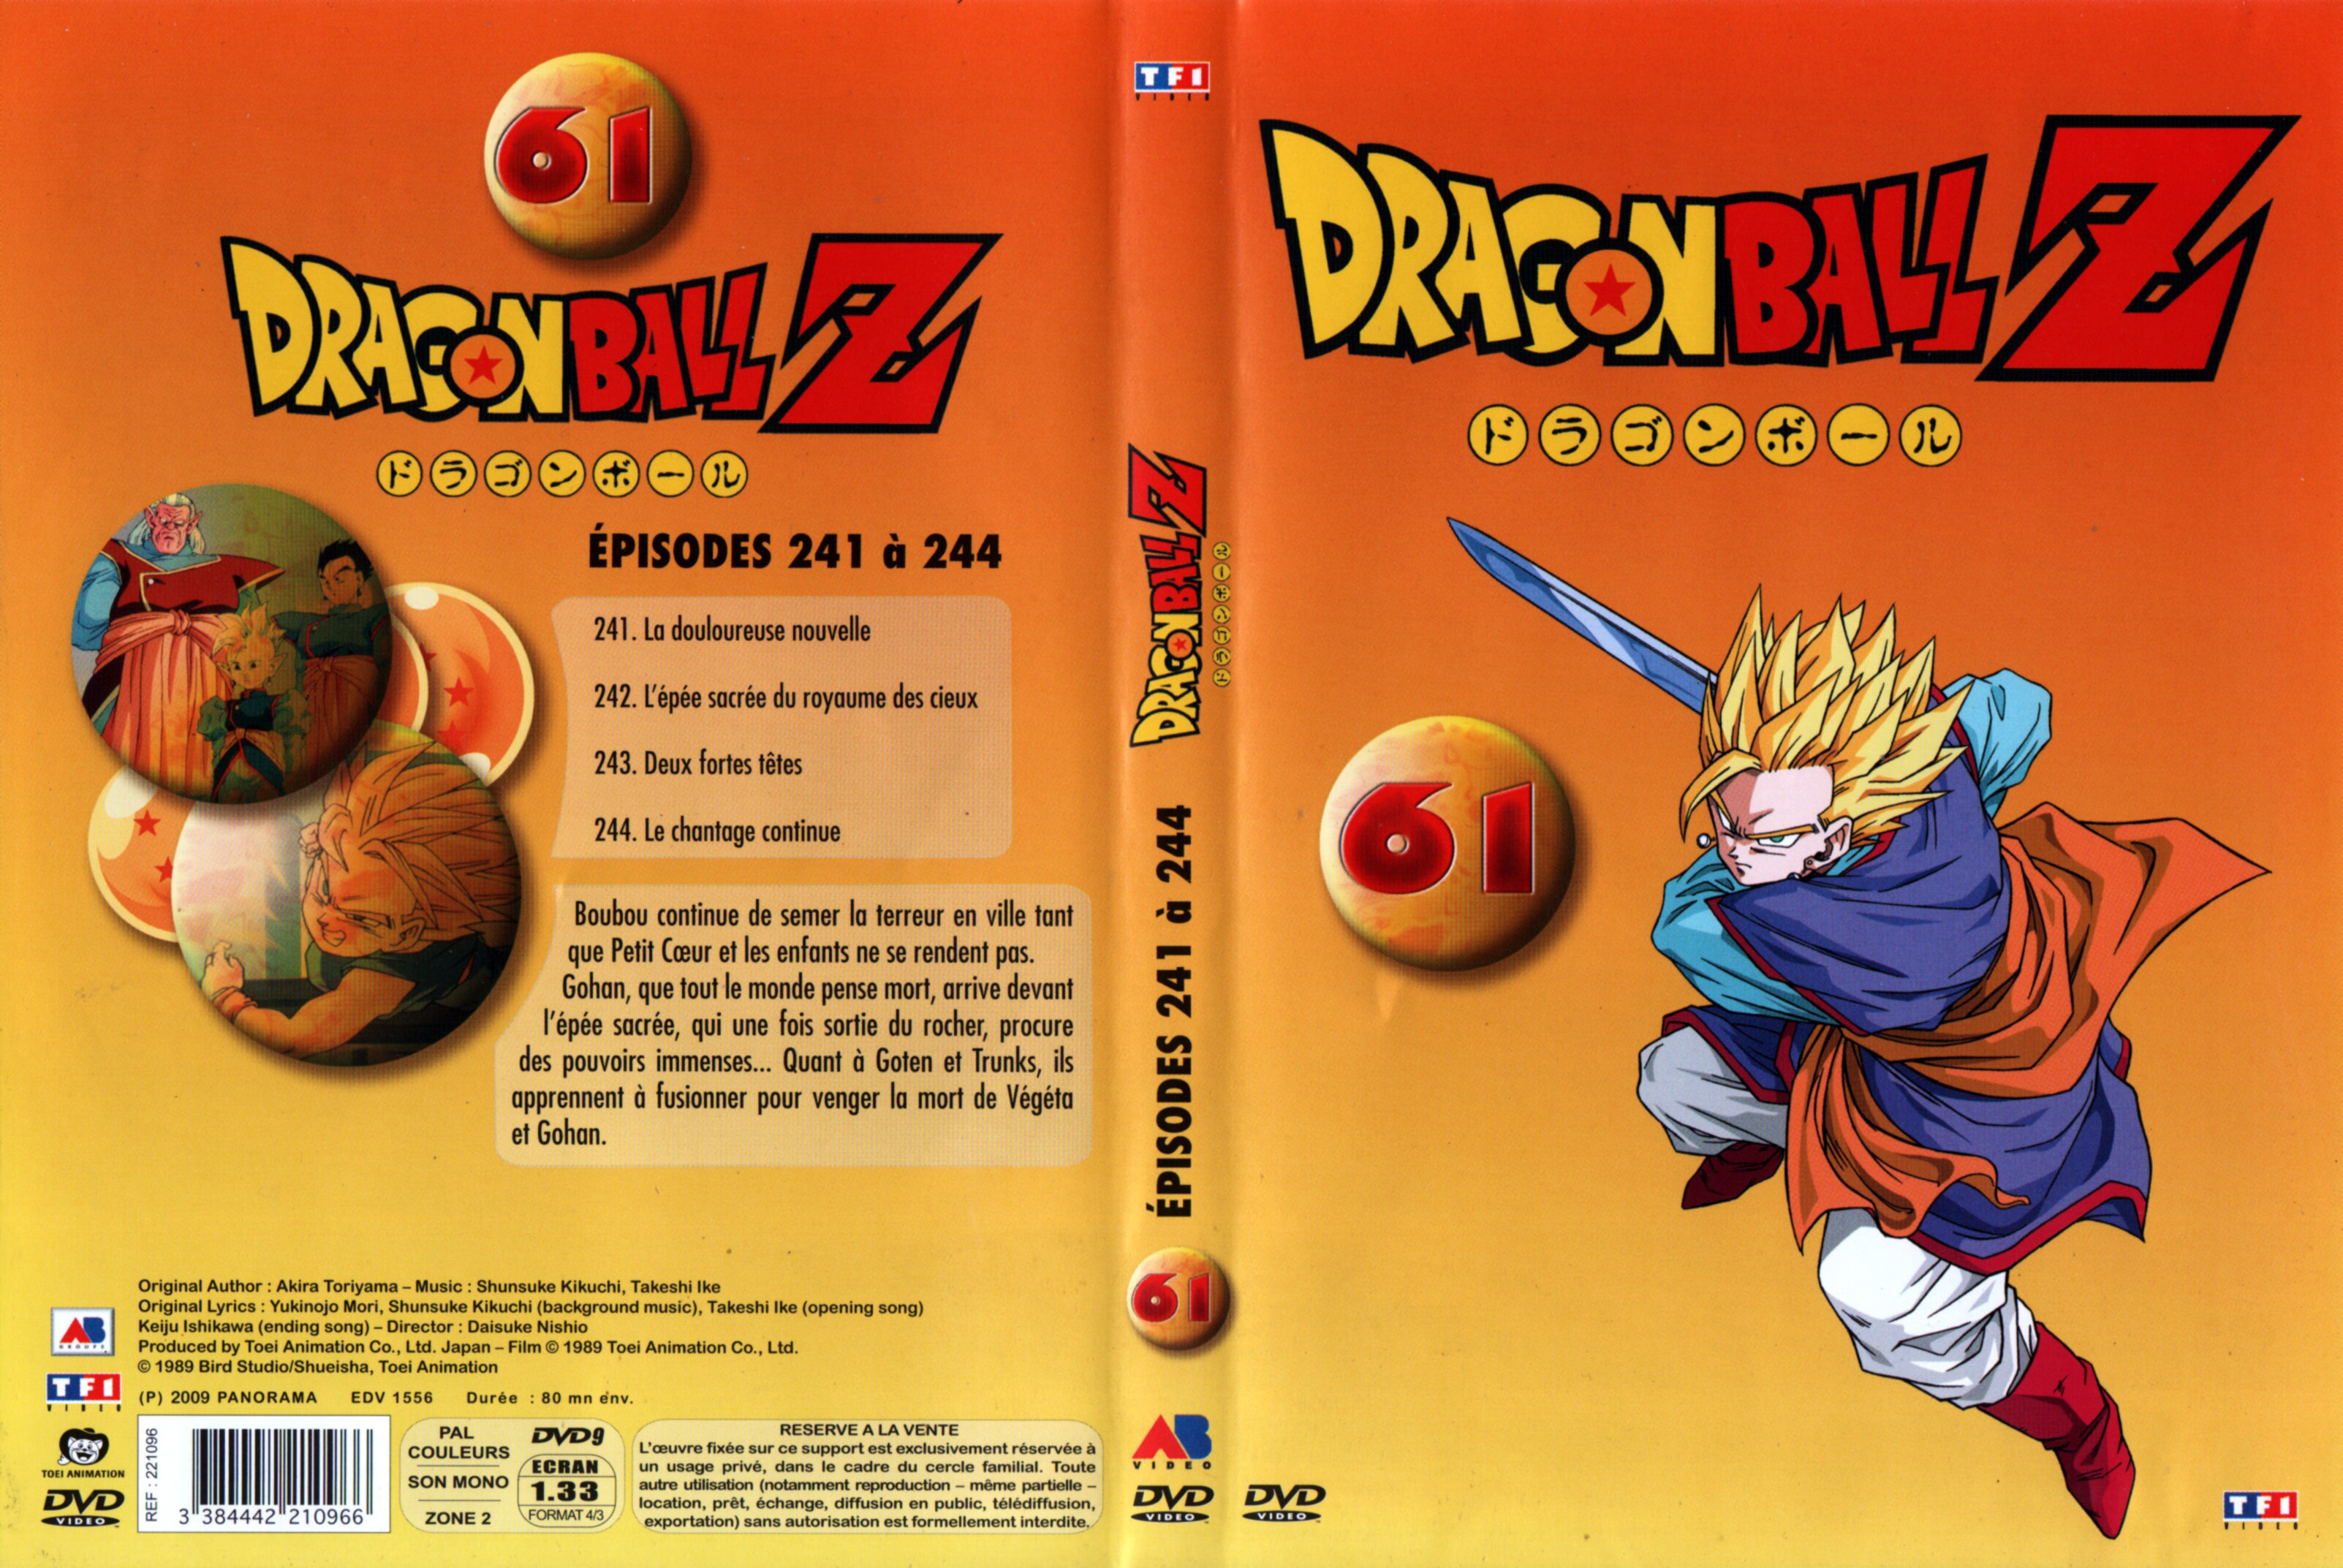 Jaquette DVD Dragon Ball Z vol 61